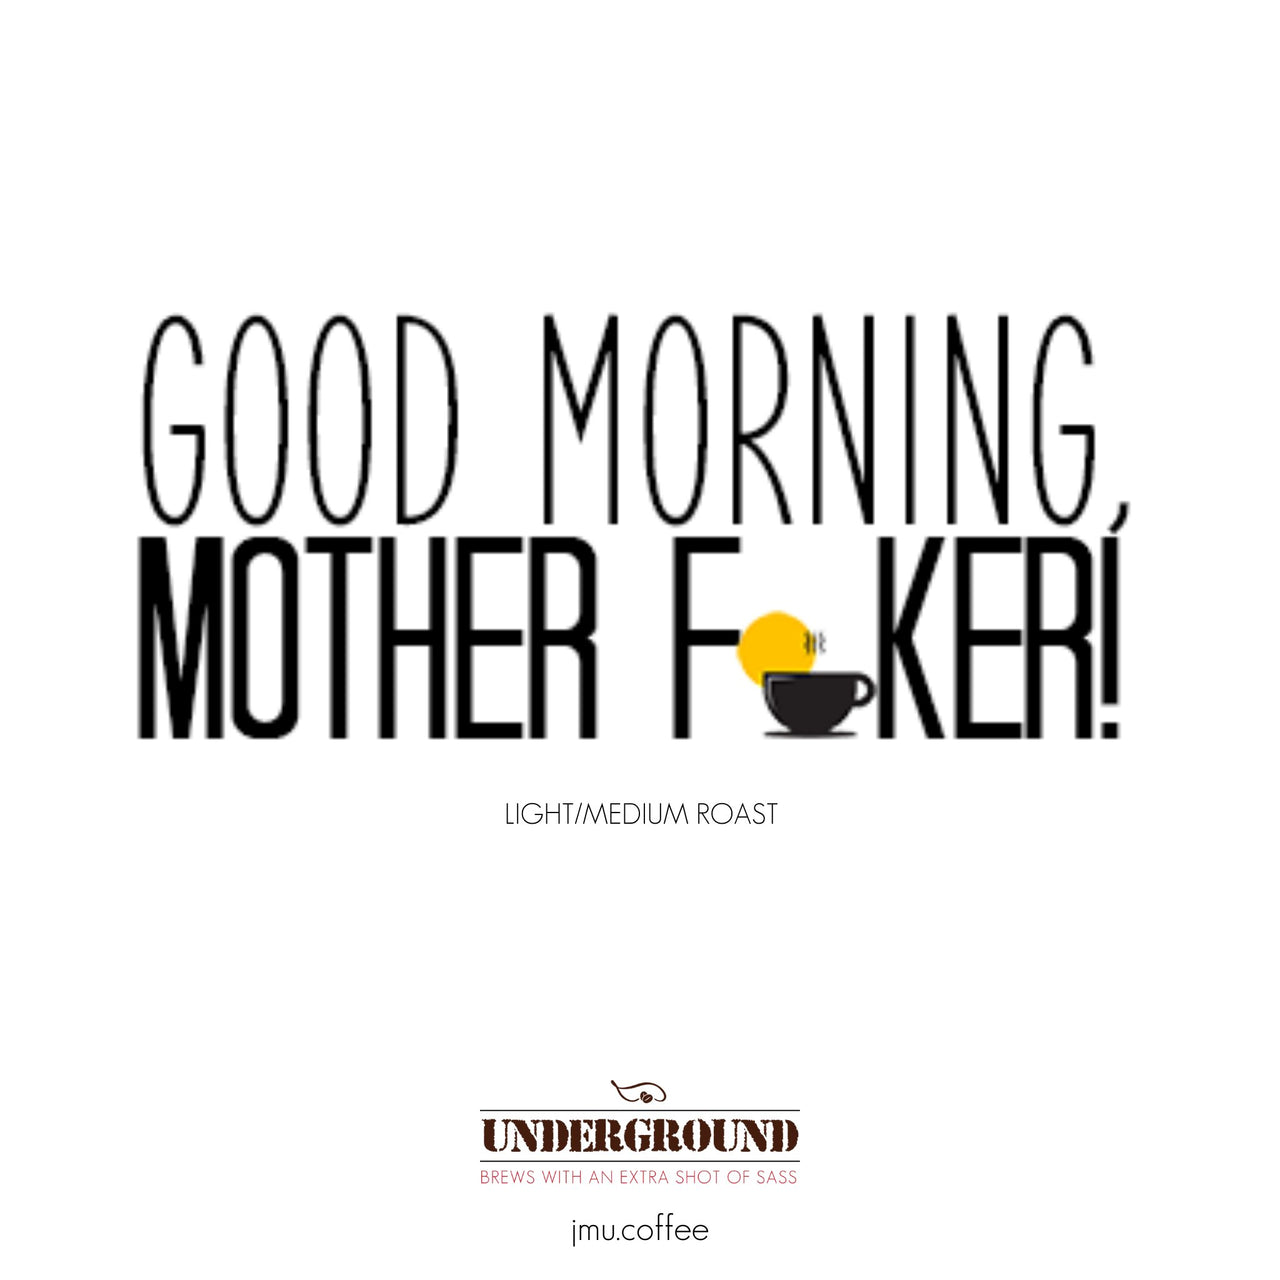 Good Morning, Mother F**ker! - Java Momma